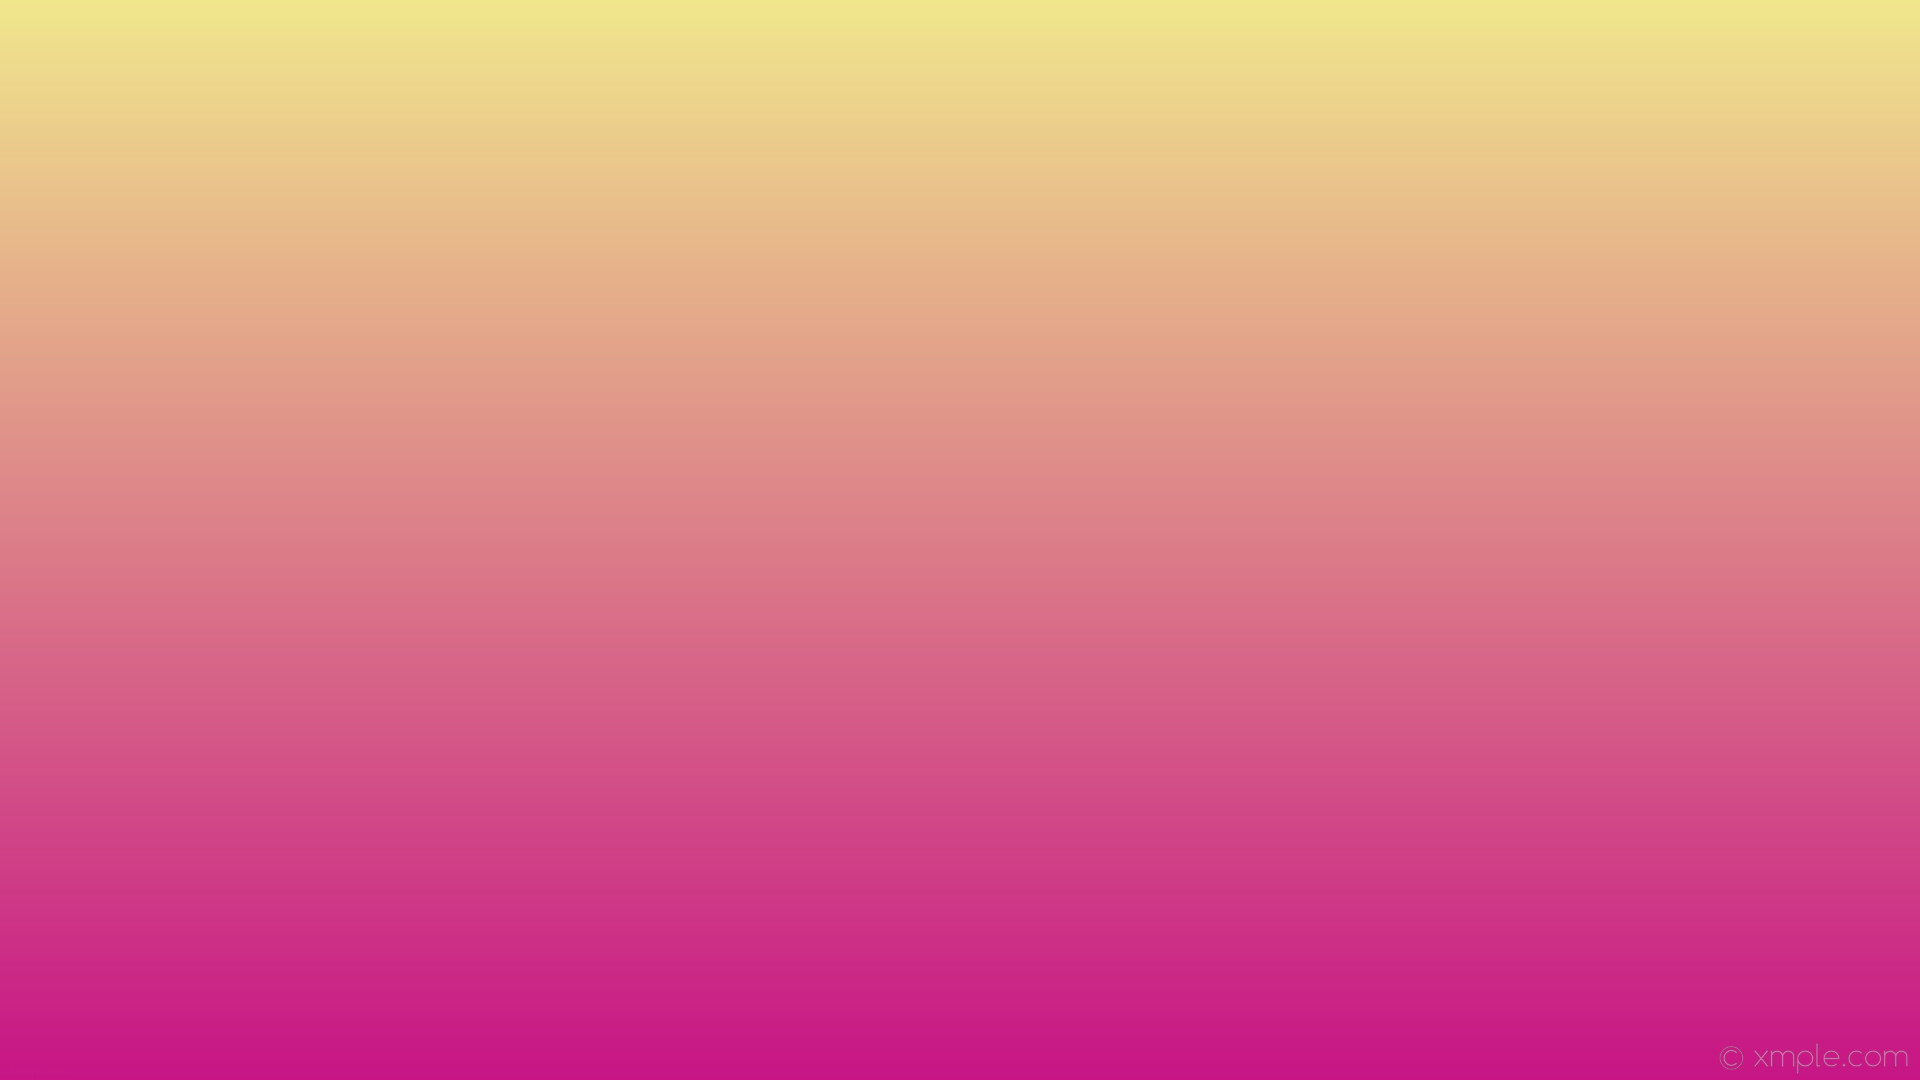 Wallpaper linear yellow pink gradient khaki medium violet red #f0e68c #c71585 90